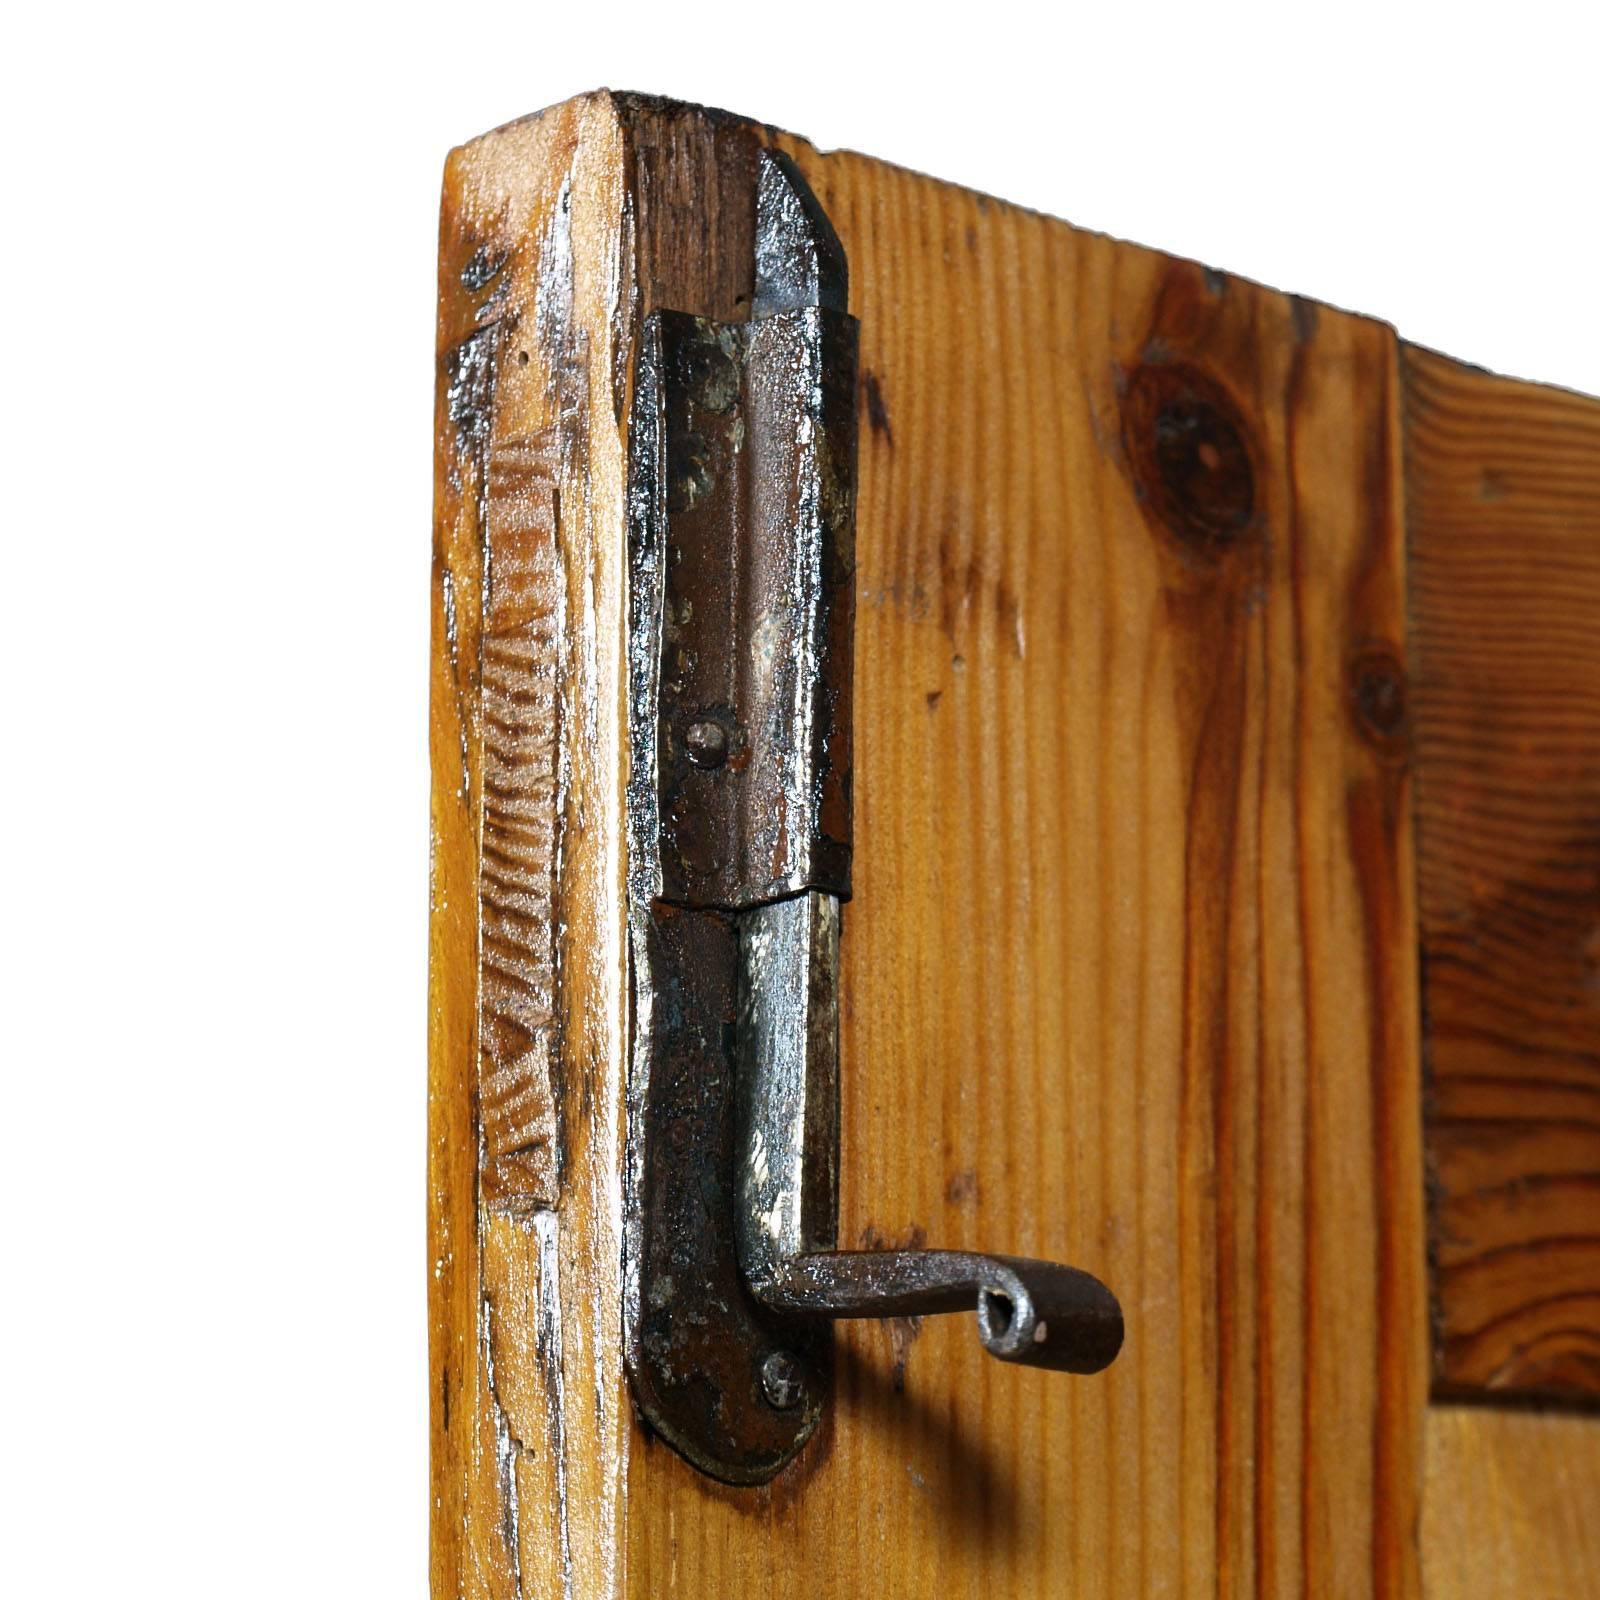 19th Century Austrian Tyrol 1860s Wardrobe Cabinet Cupboard in Solid Wood Polished to Wax